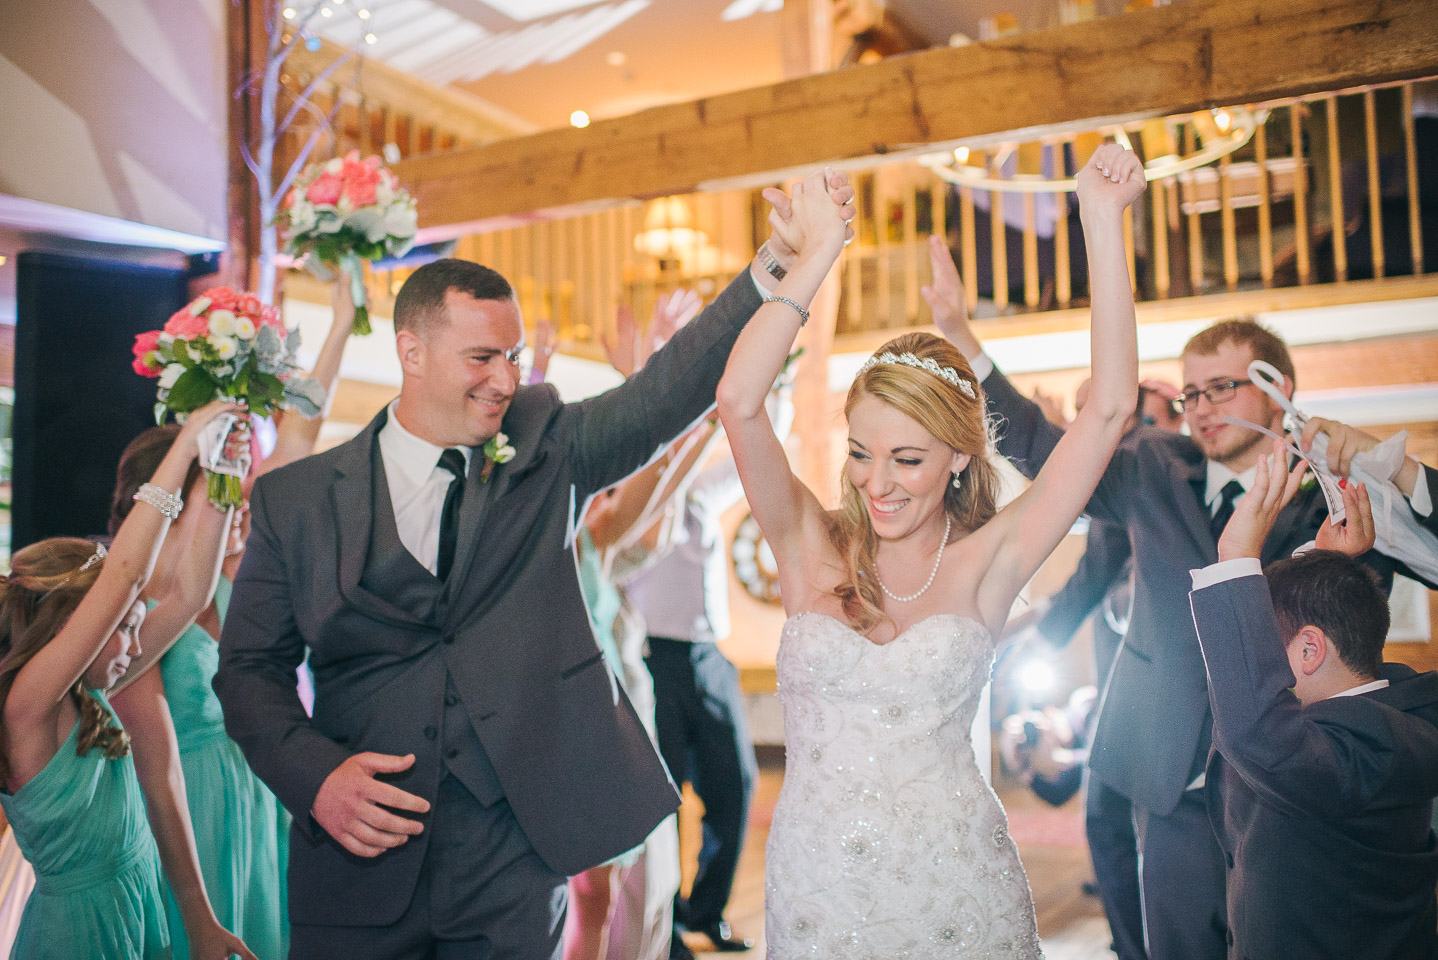 NH Wedding Photographer: newlyweds introductions